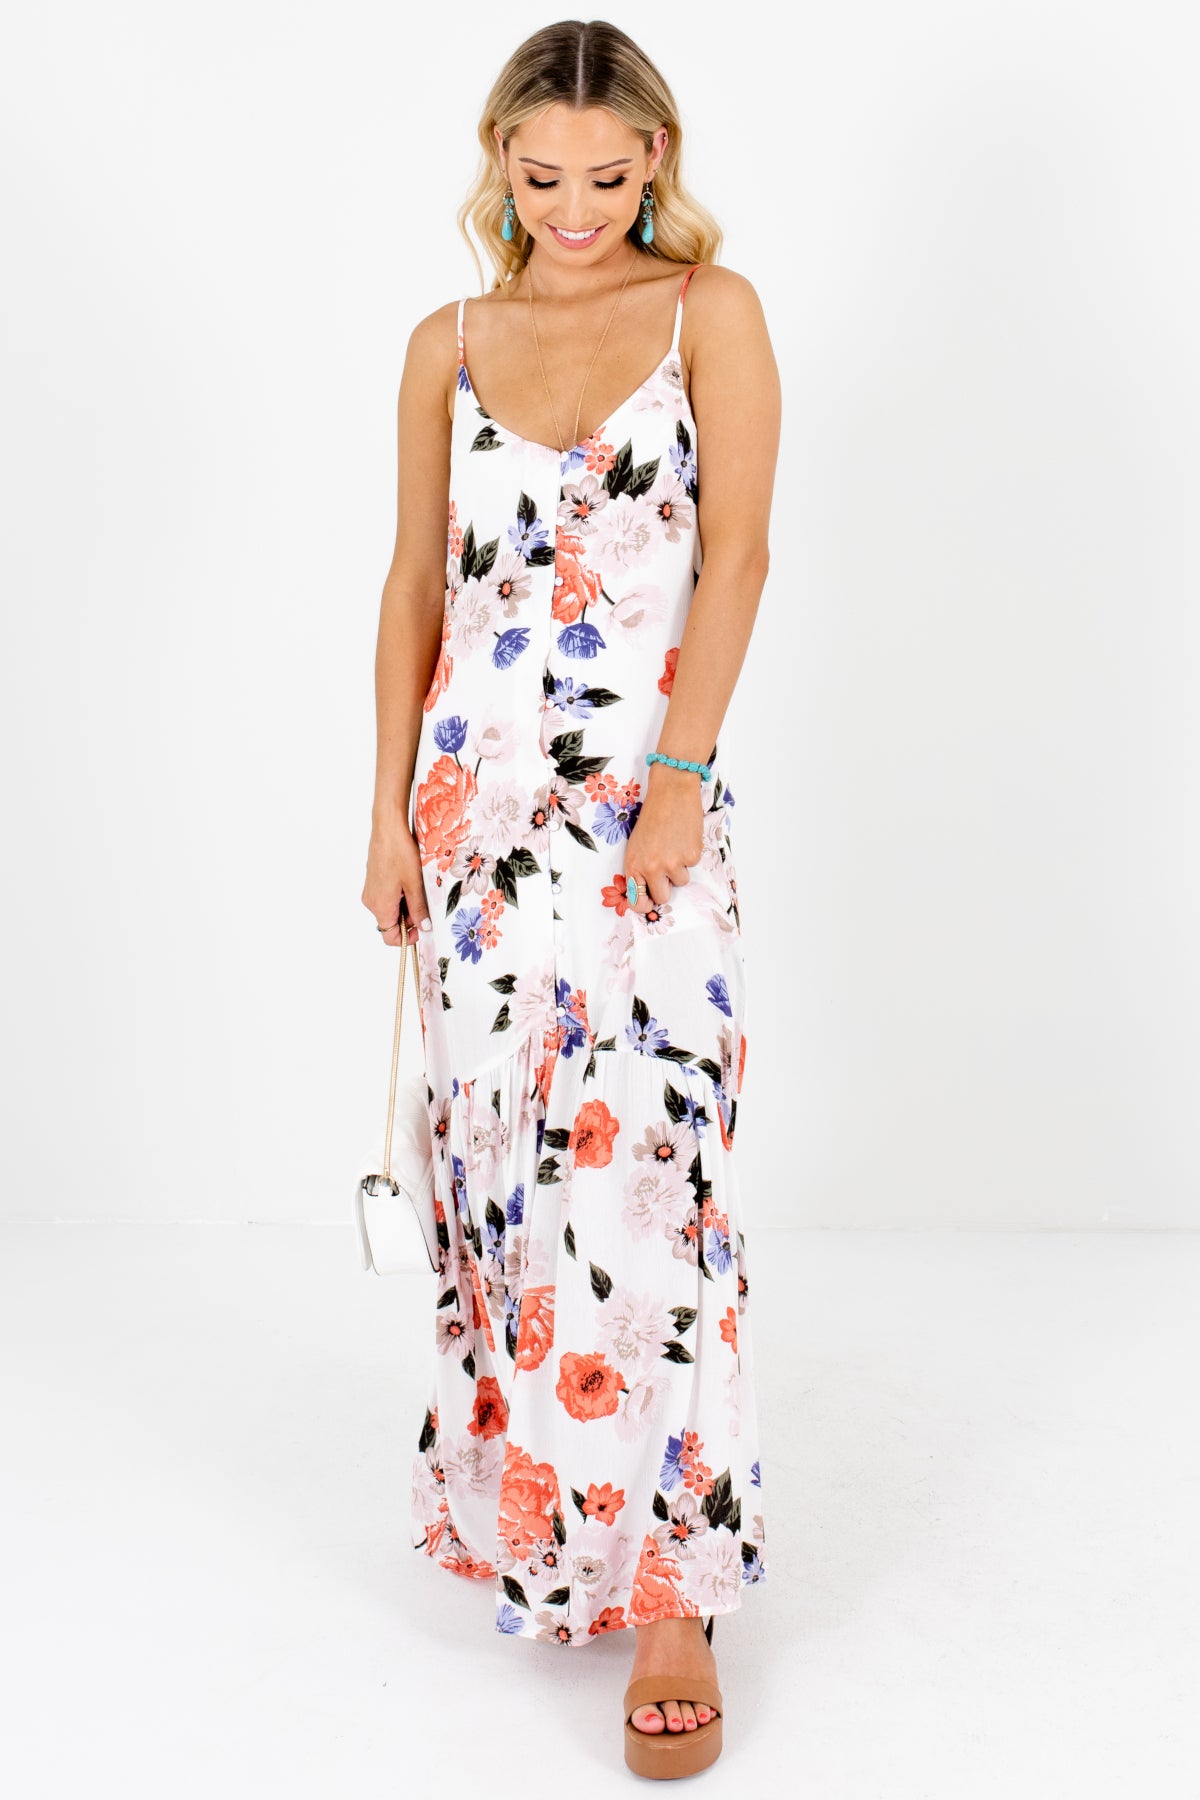 White Floral Print Button-Up Maxi Dresses Affordable Online Boutique